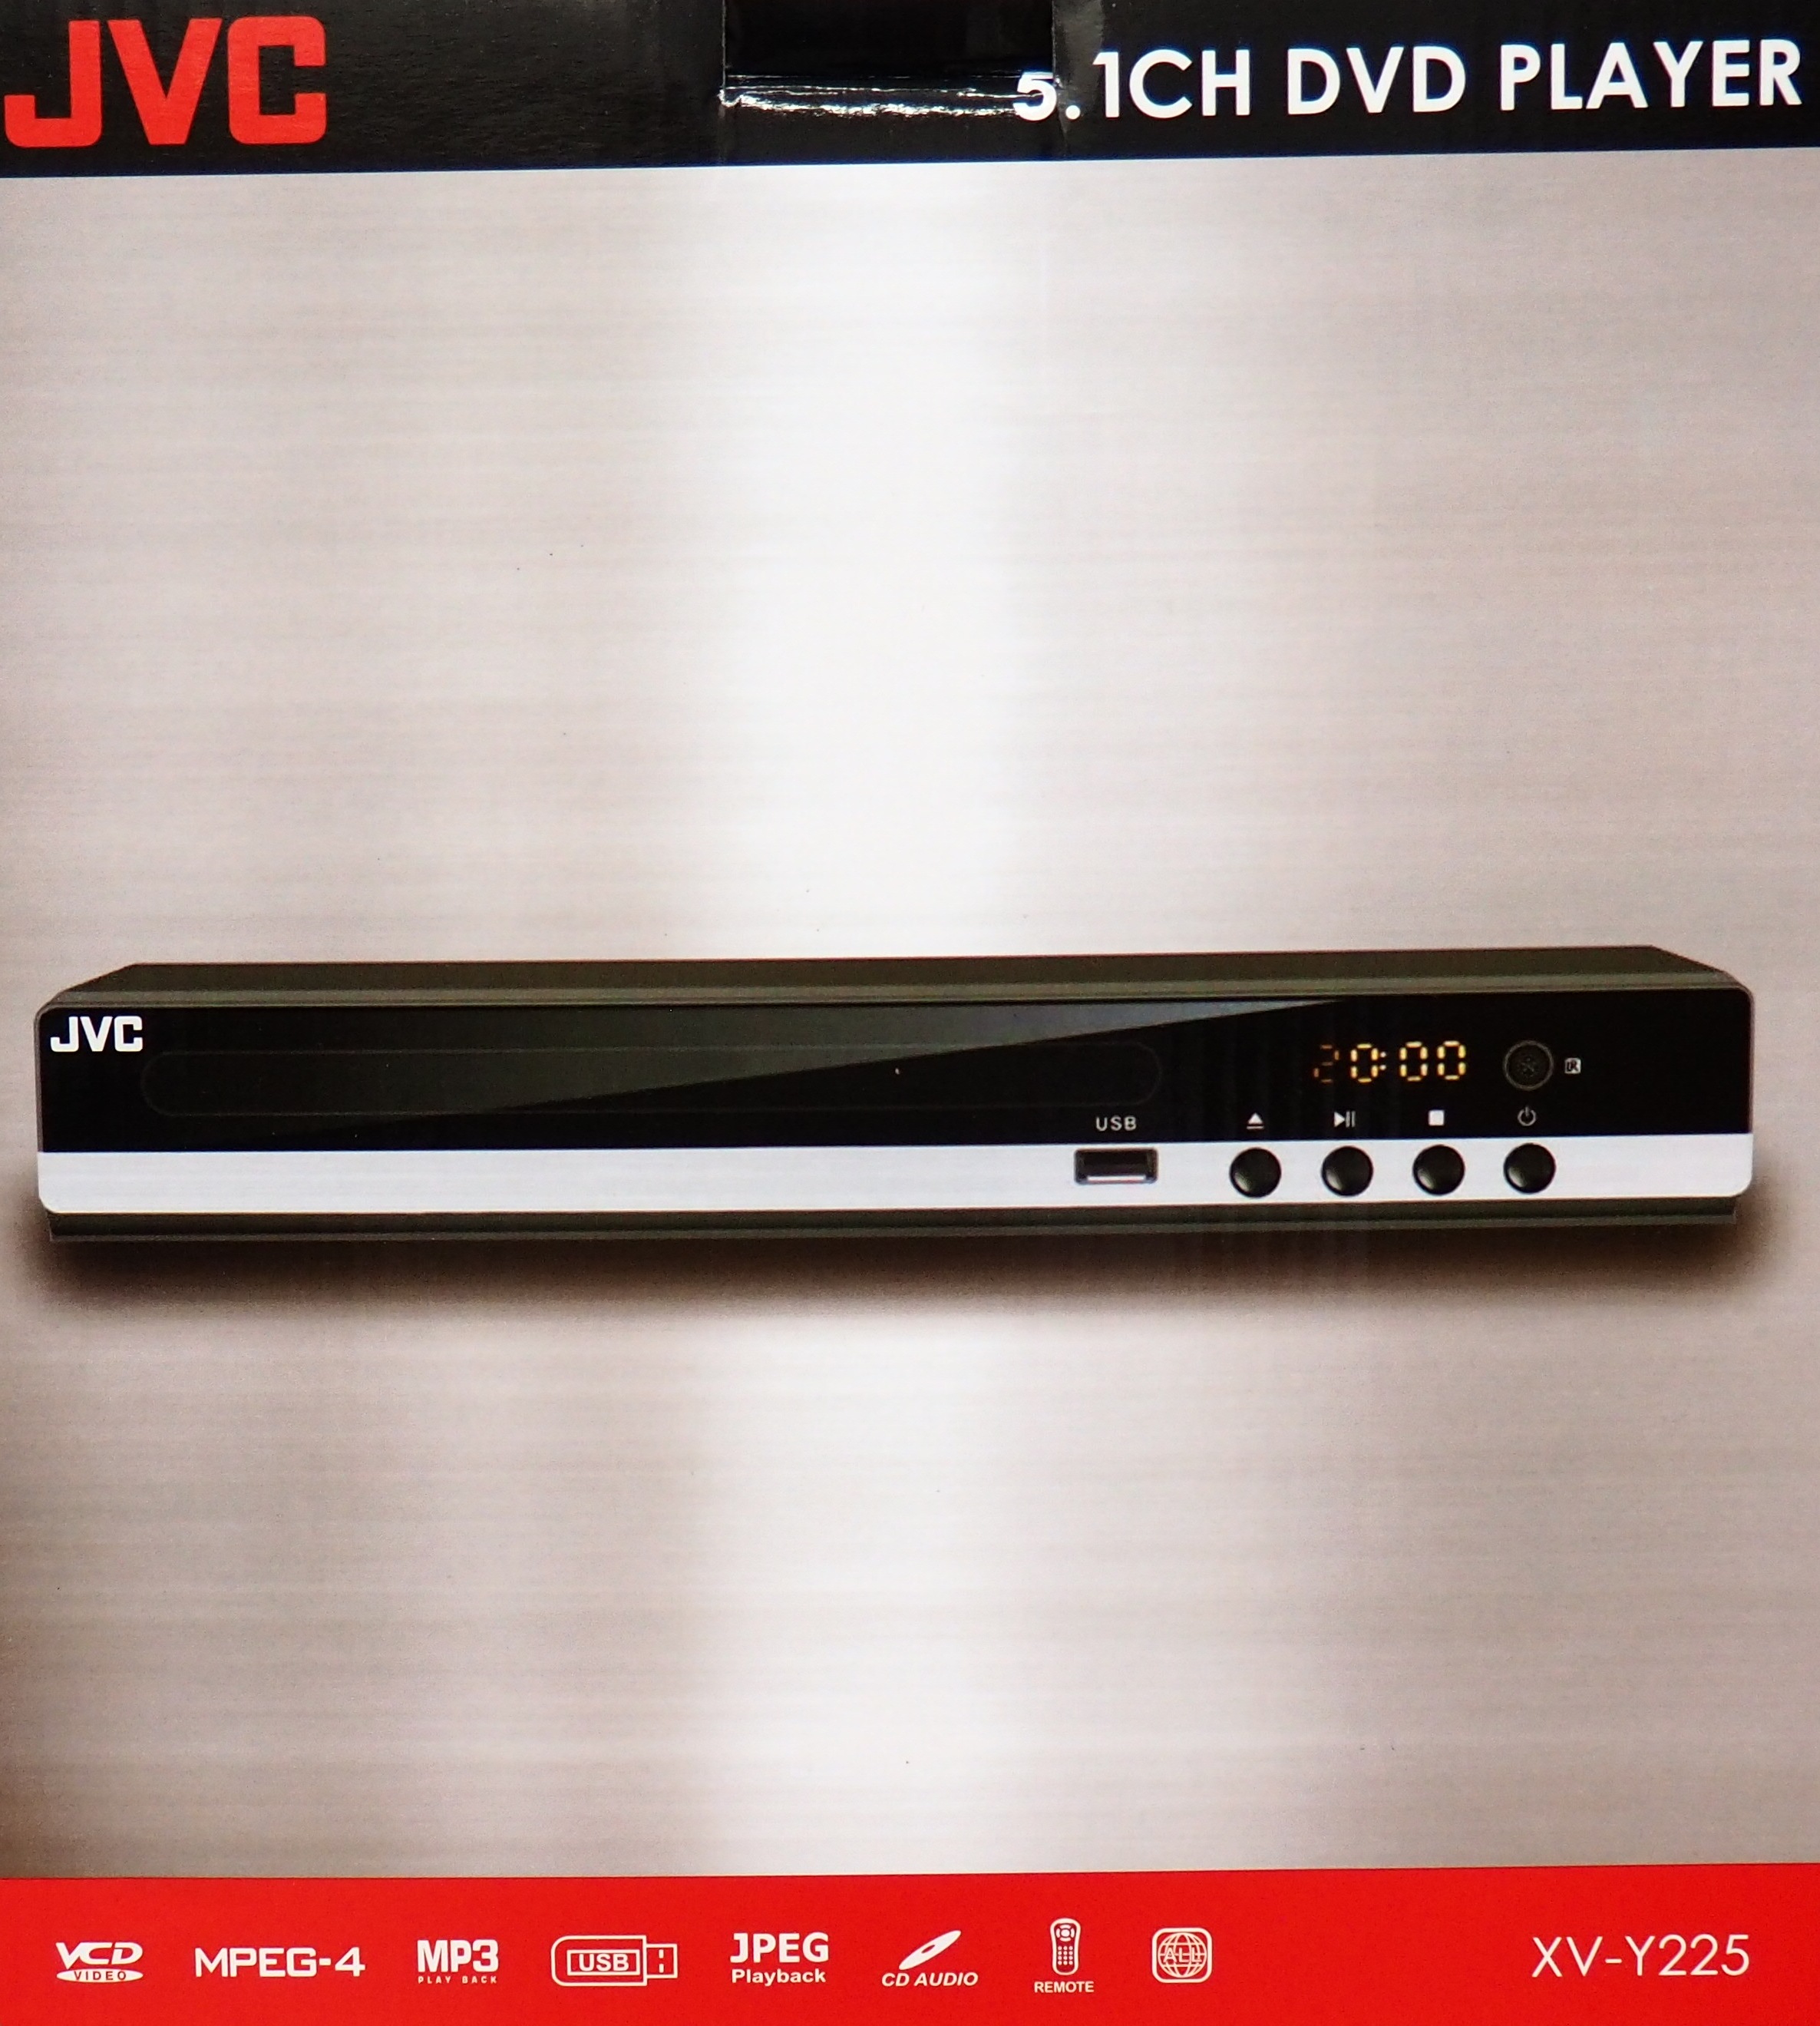 Jvc Kenwood Jvc Xv Y225 All Region Free Dvd Player Multi Format 5 1 Channel Supports Divx Mpeg Mp3 Wma Usb Black